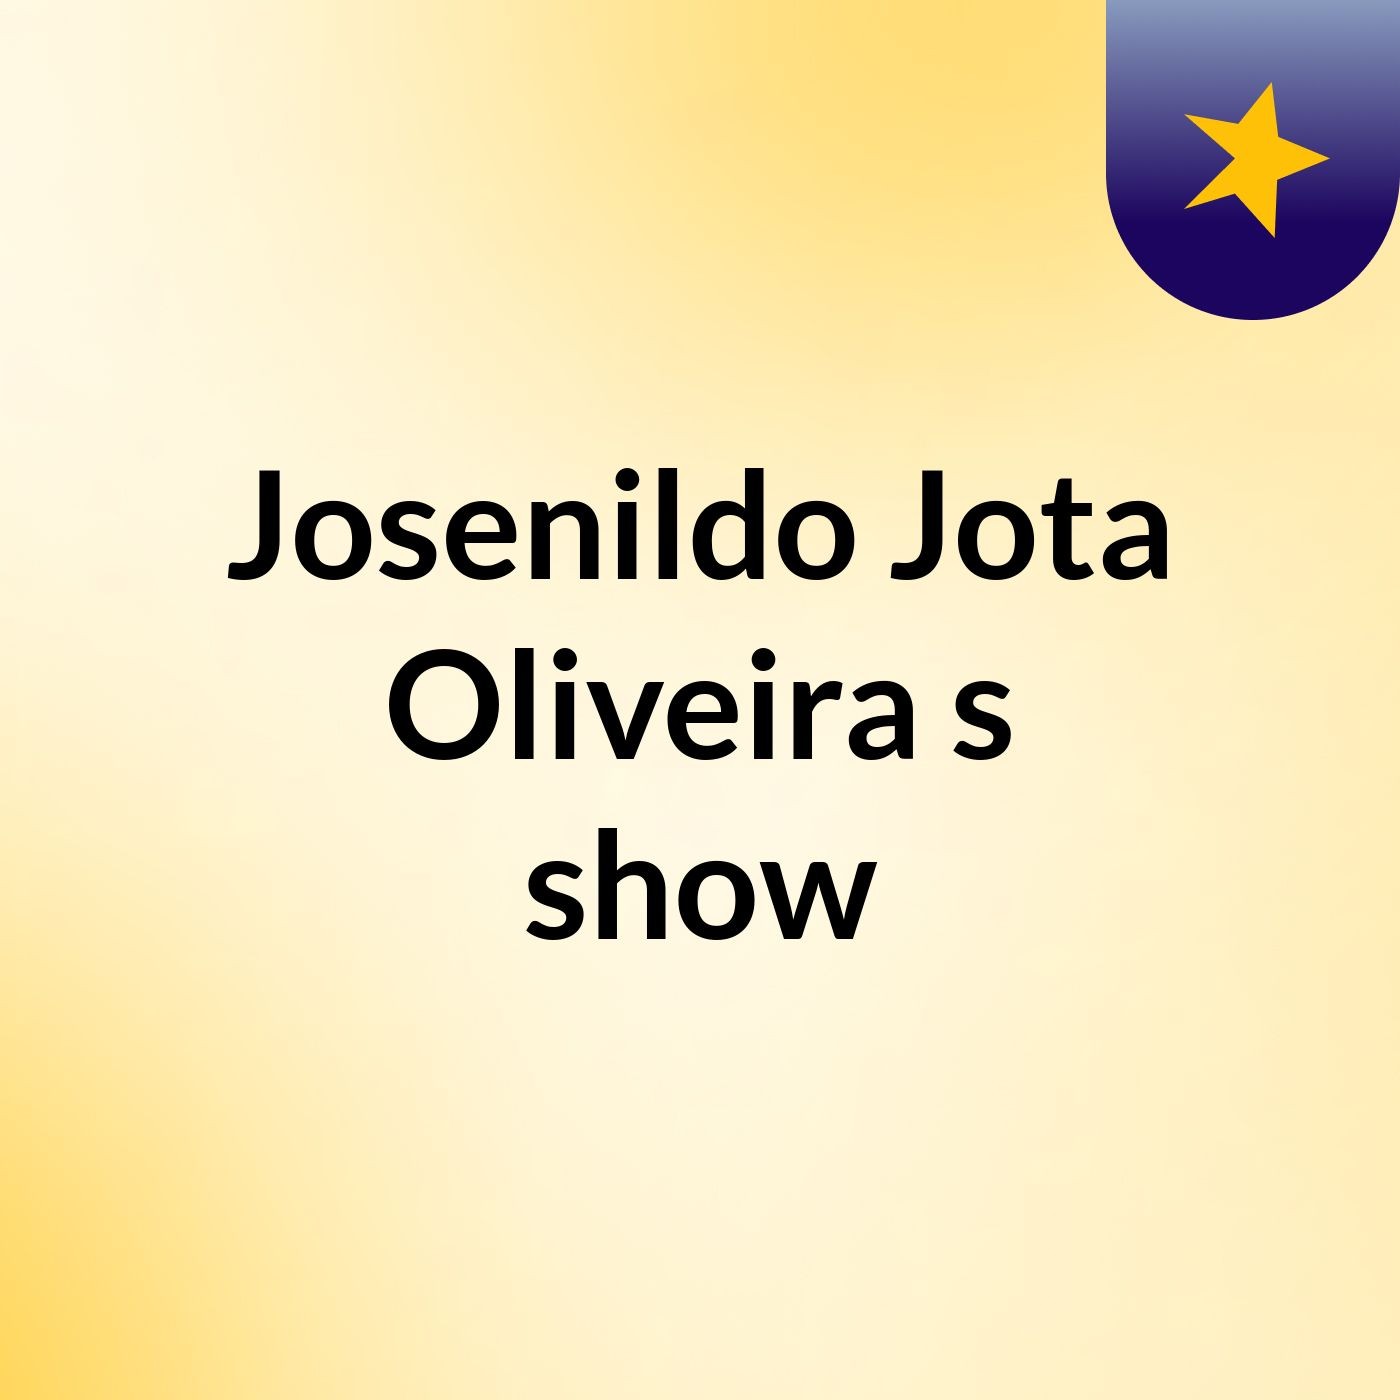 Josenildo Jota Oliveira's show